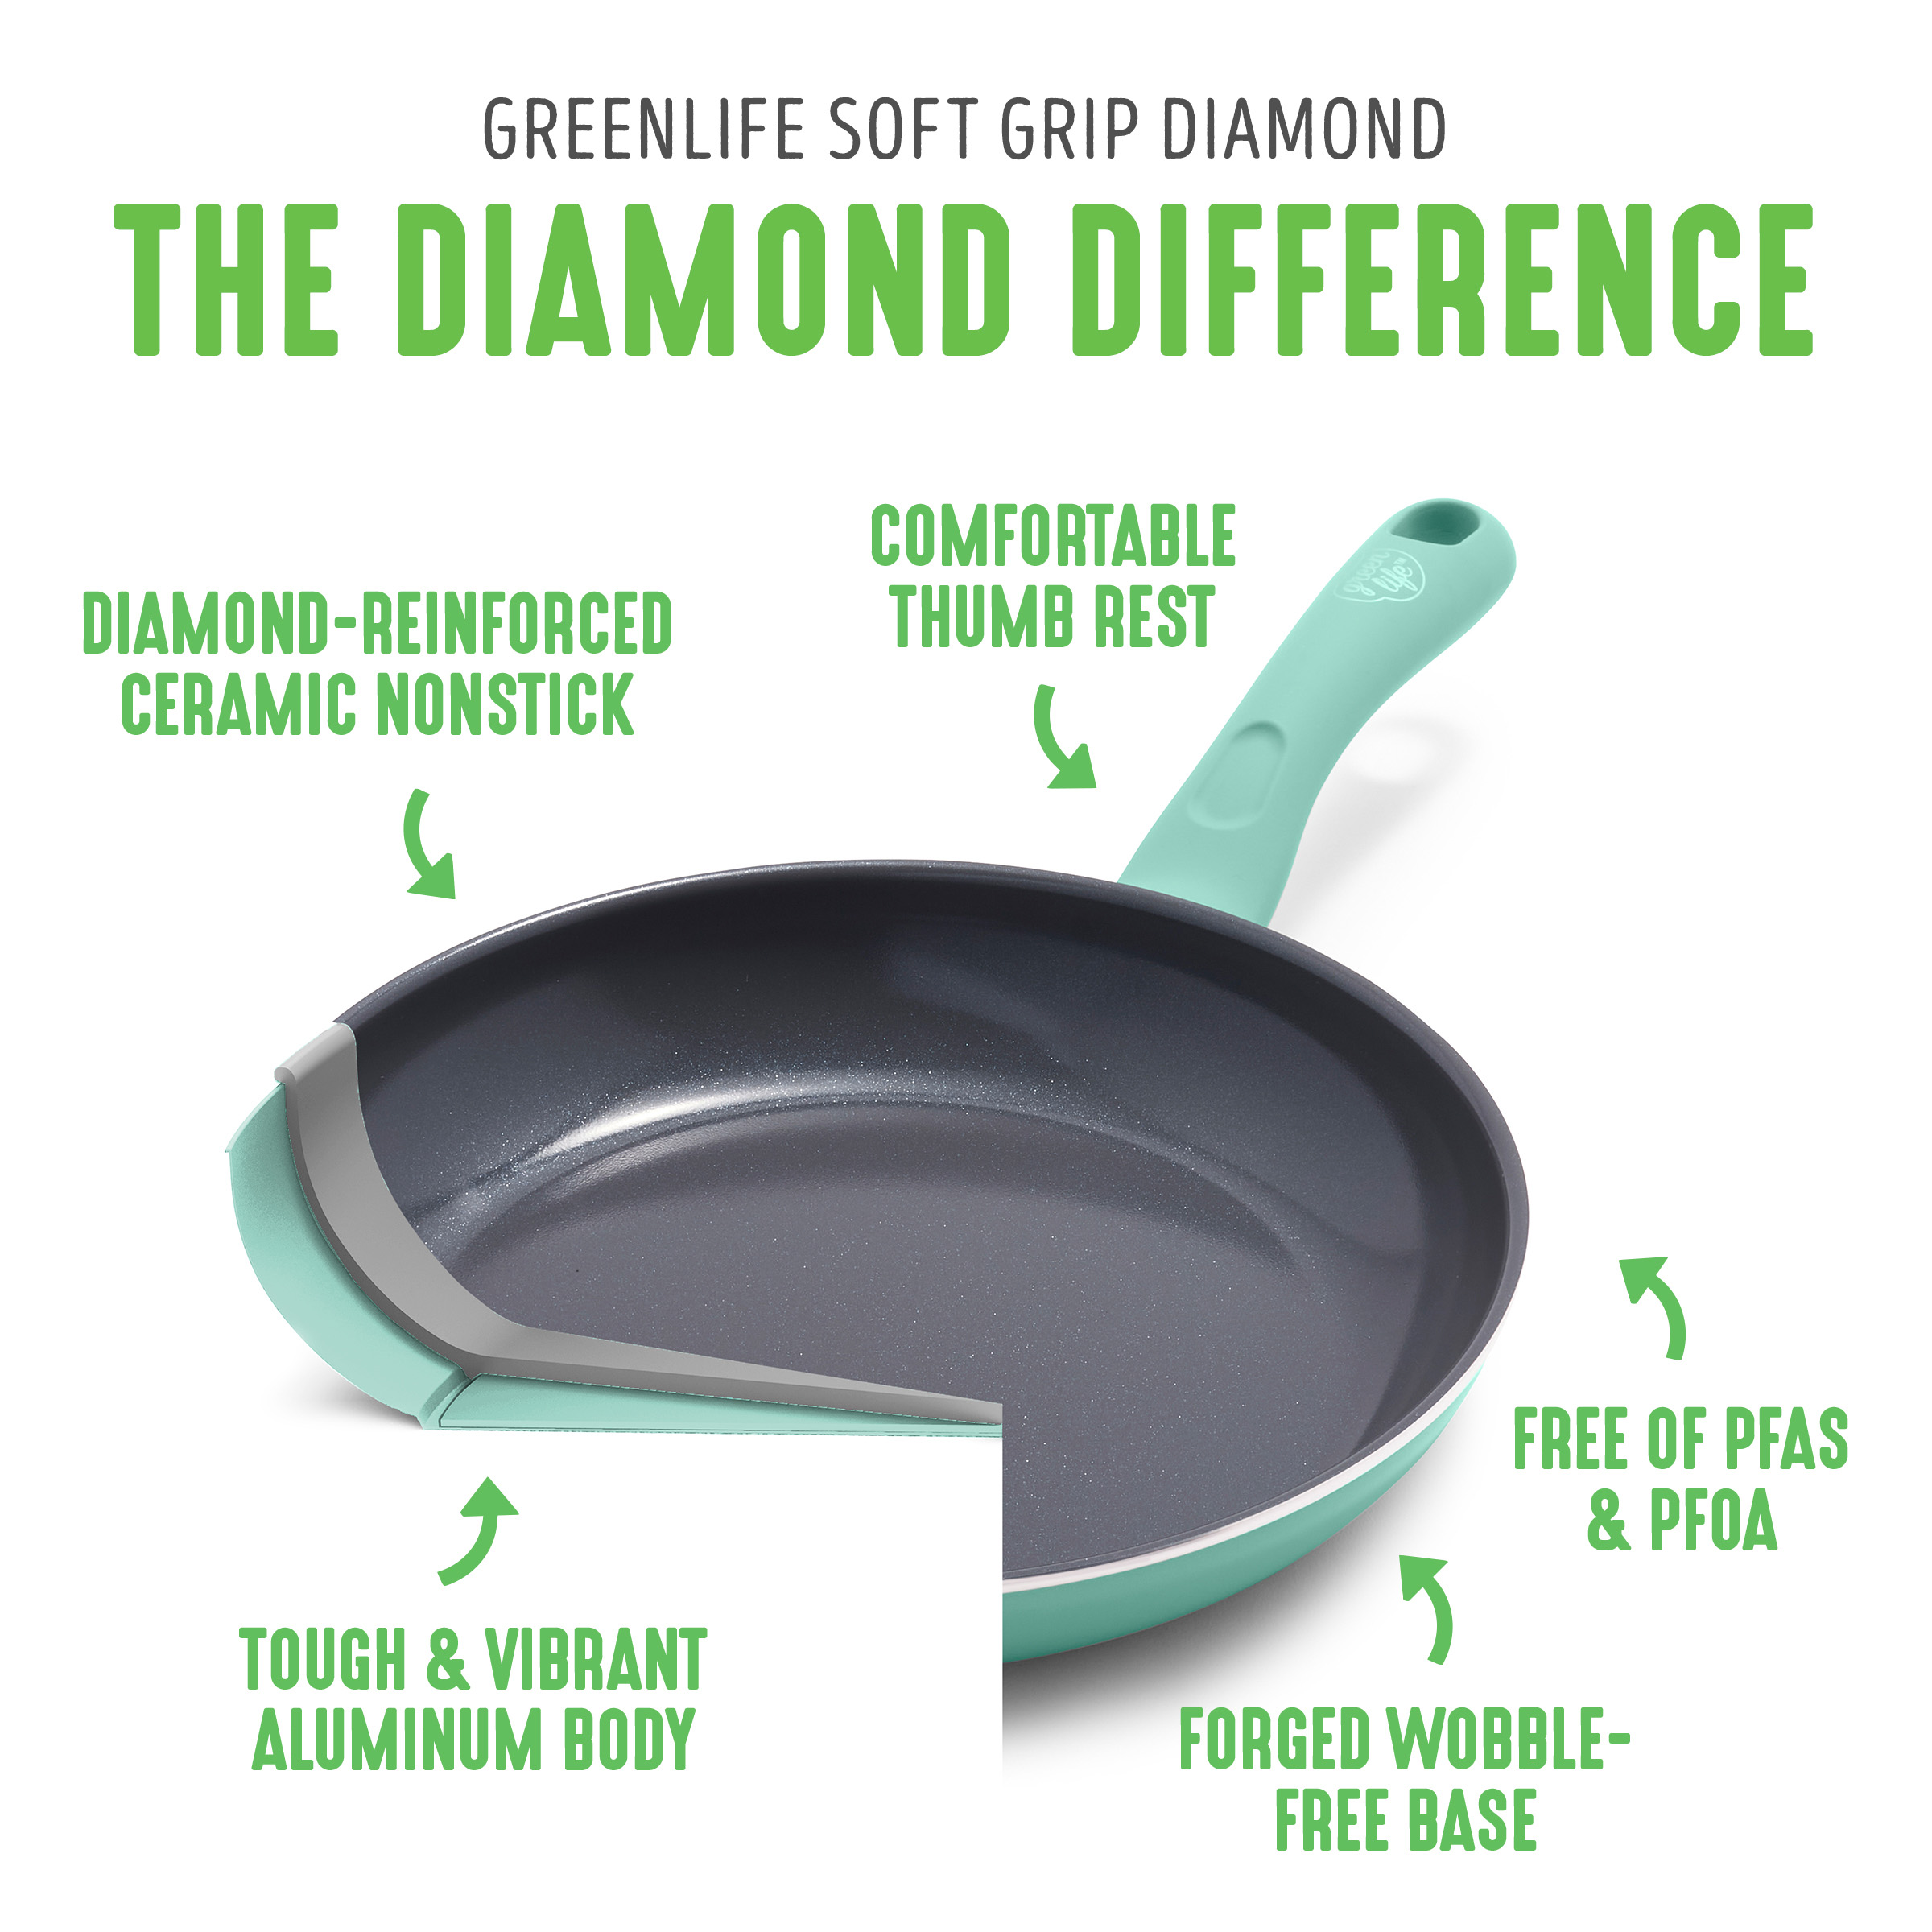 Greenlife Diamond Ceramic Non-stick 13Pc Cookware Set, Turquoise - image 3 of 10